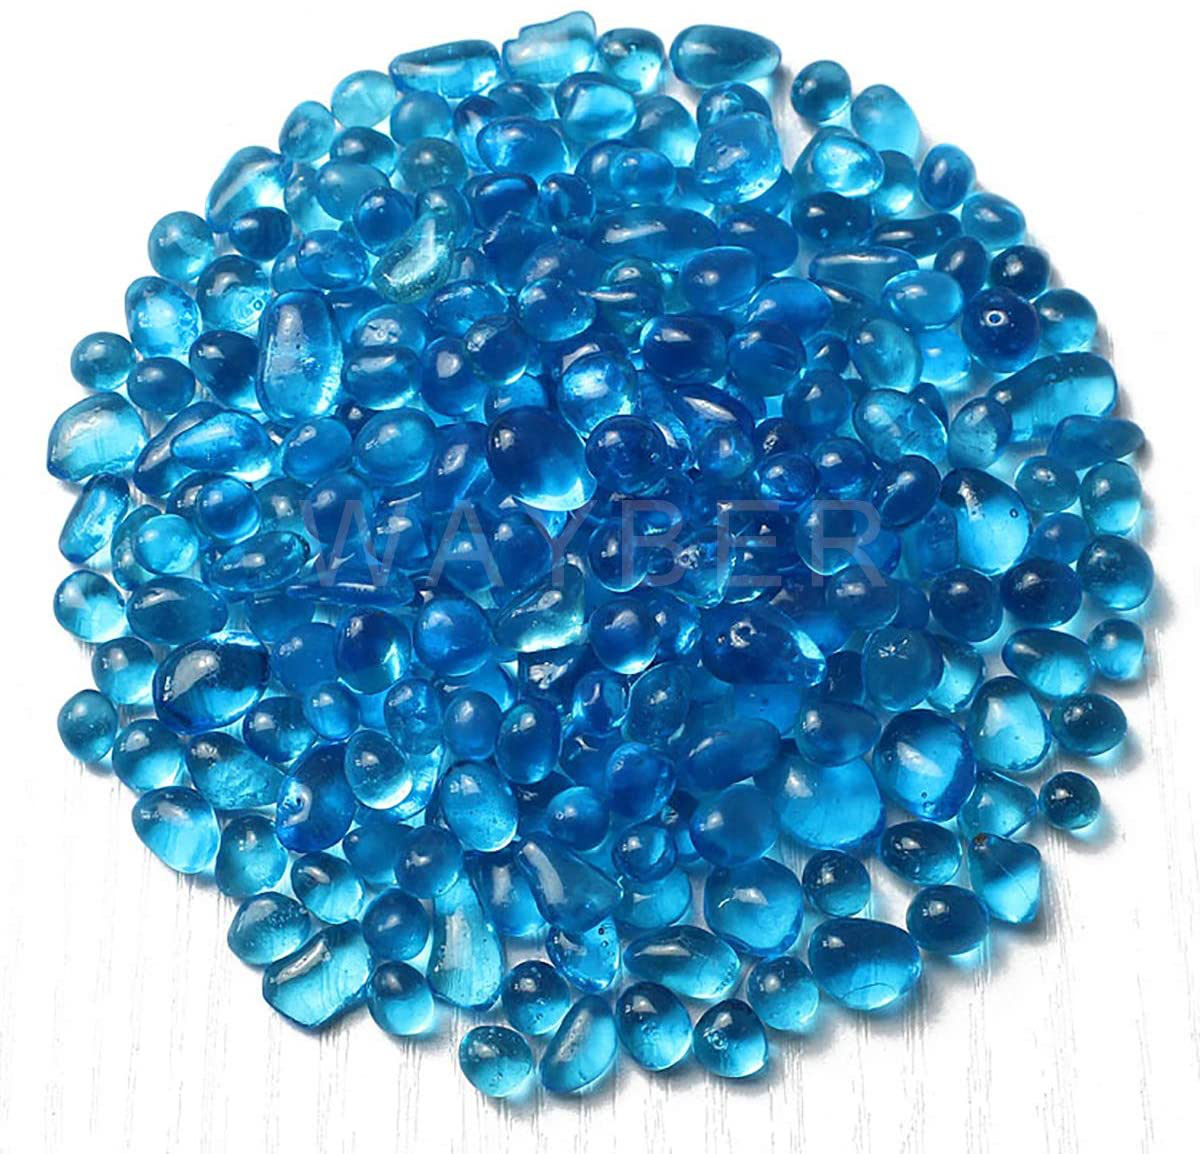 WAYBER Glass Stones, 1Lb/460G Irregular Sea Glass Pebbles Non-Toxic Ar –  KOL PET